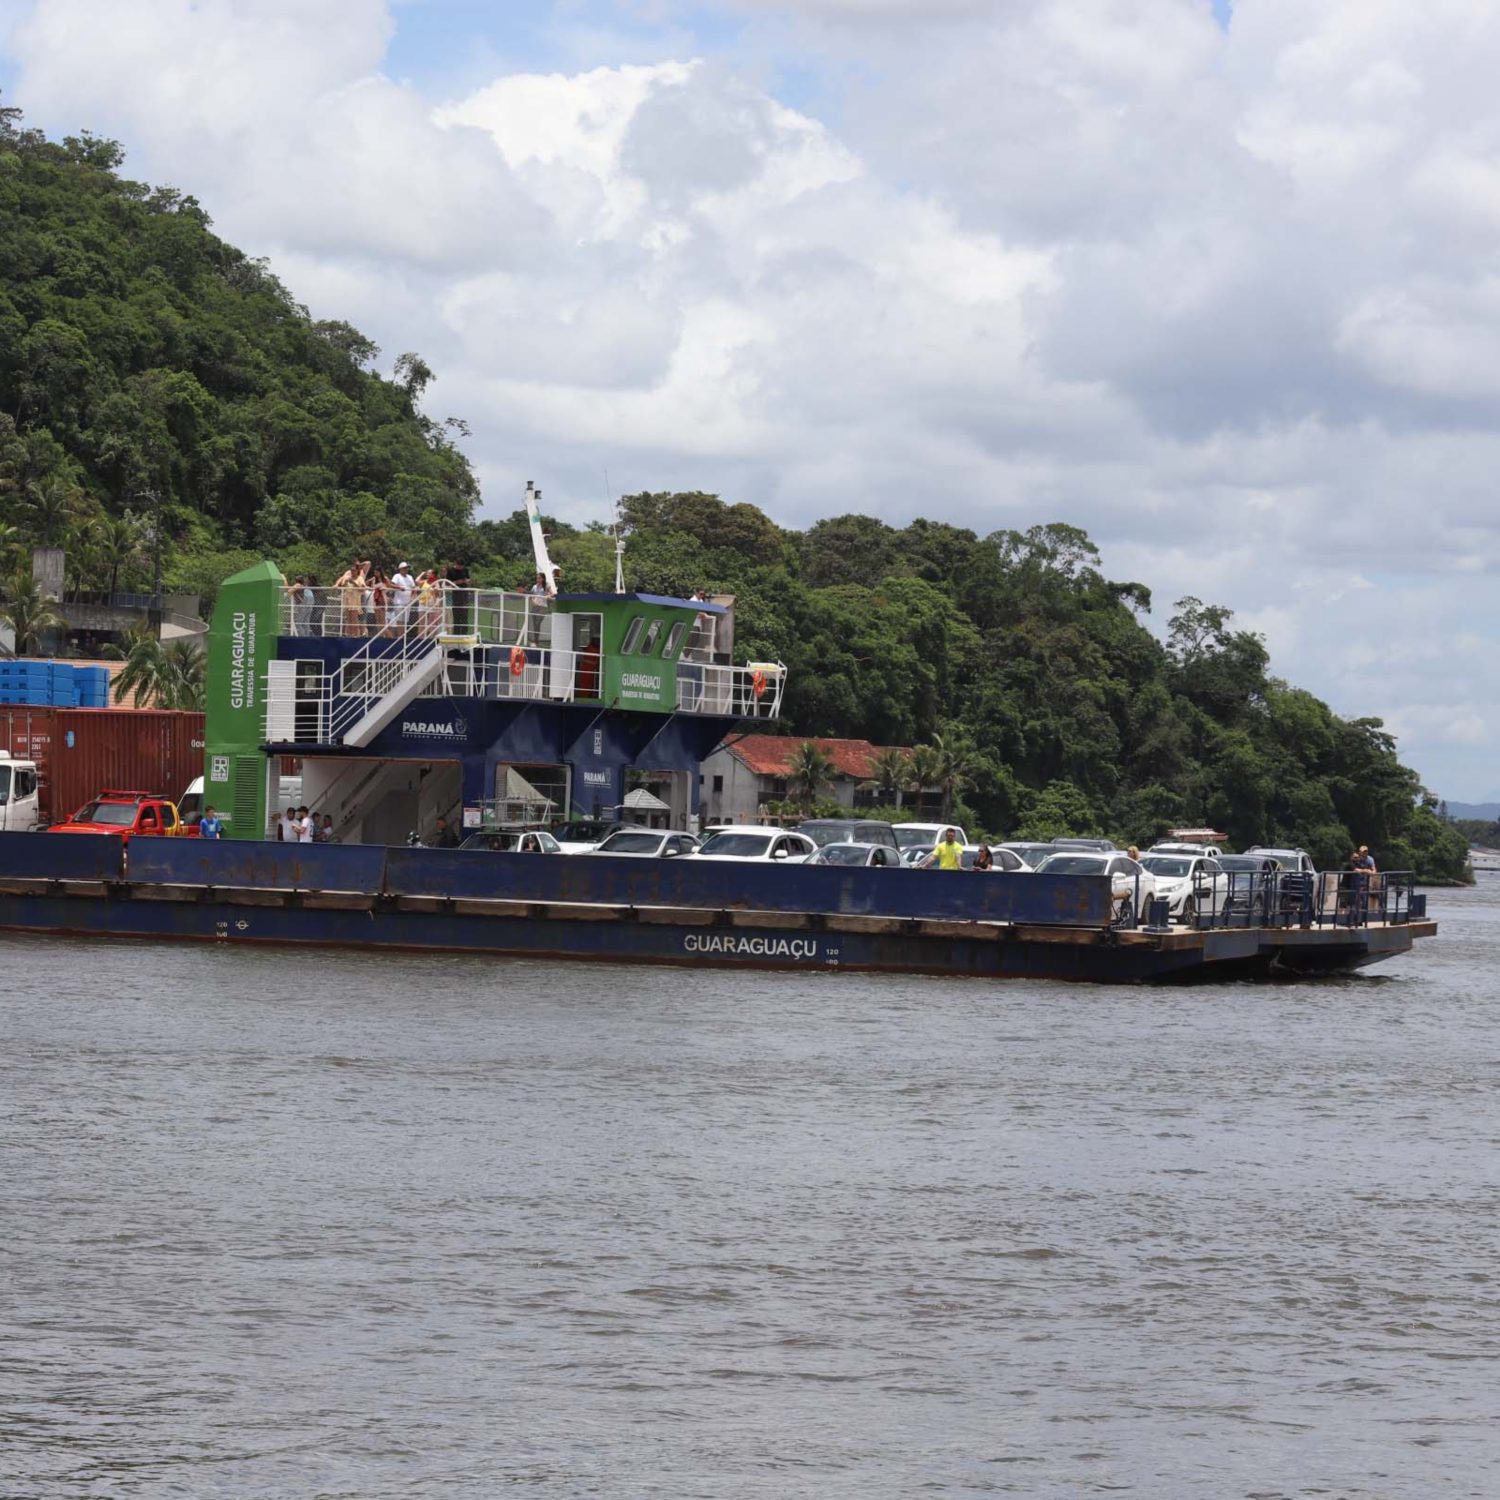  apesar de deslizamento de terra na estrada de acesso, ferry-boat em Guaratuba continua funcionando normal 